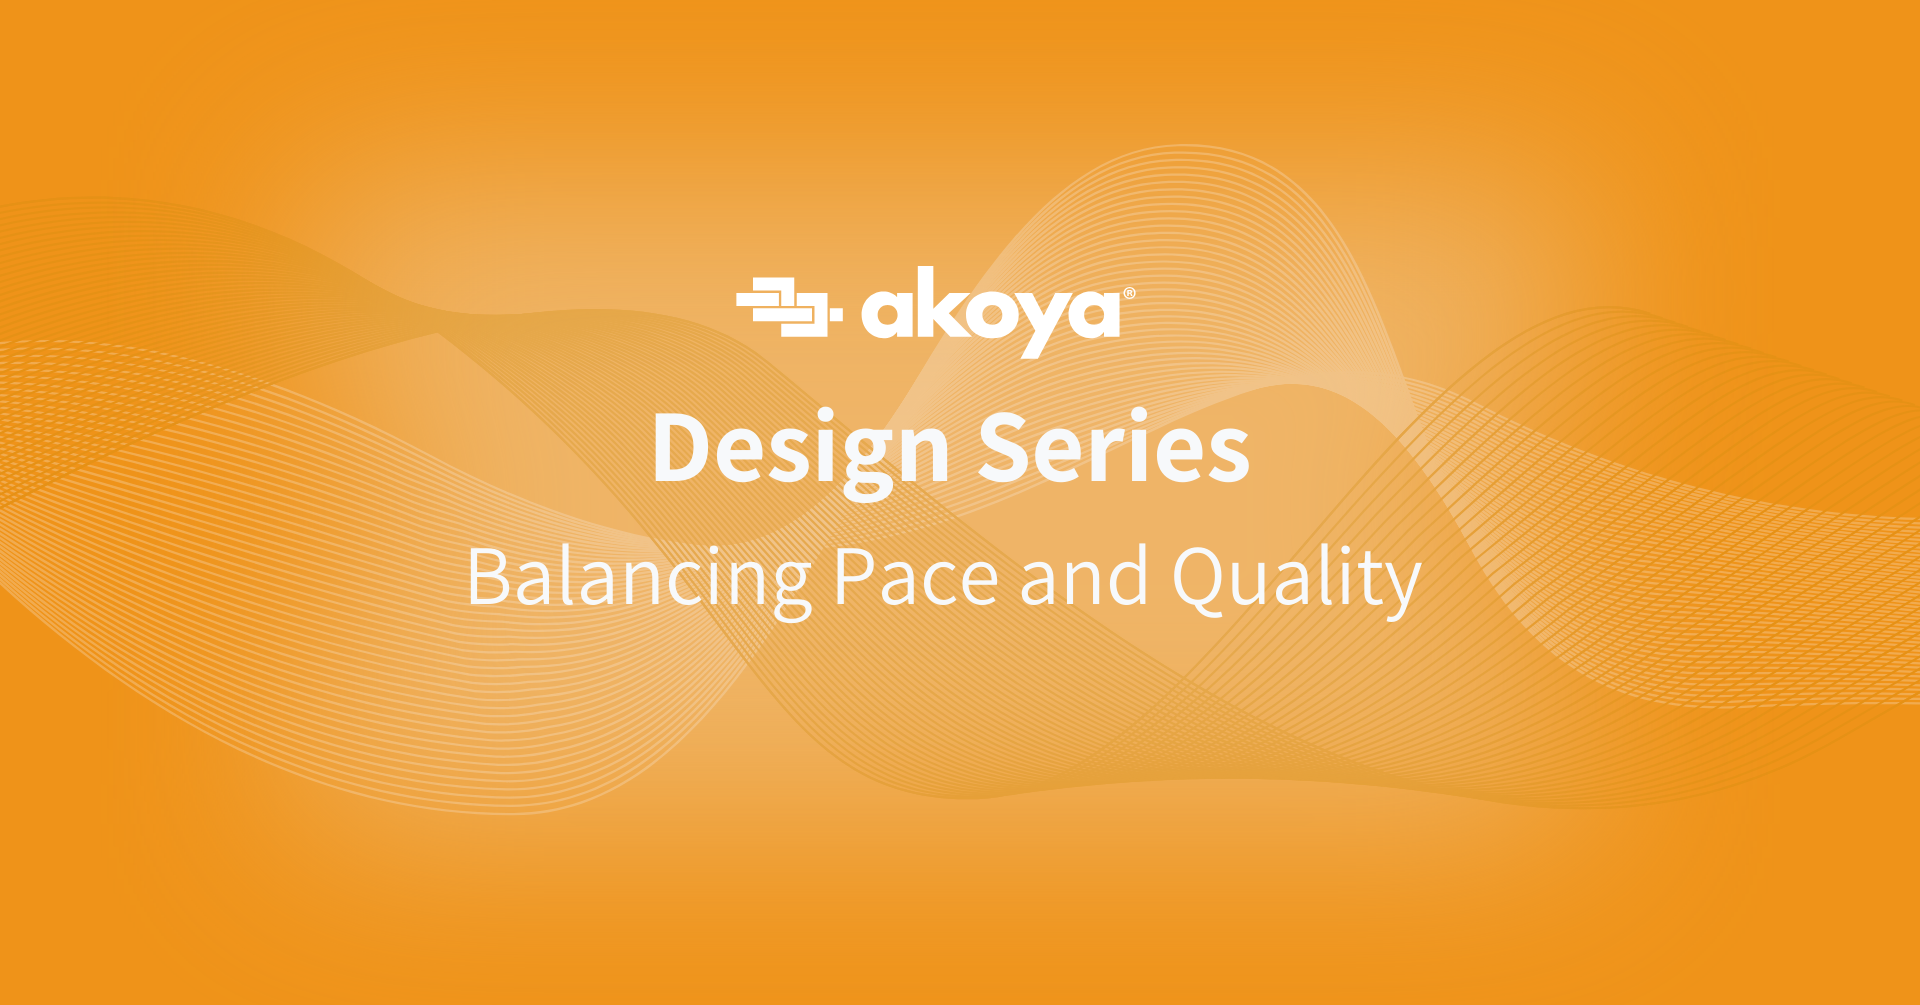 Akoya logo and design series title on orange tech background